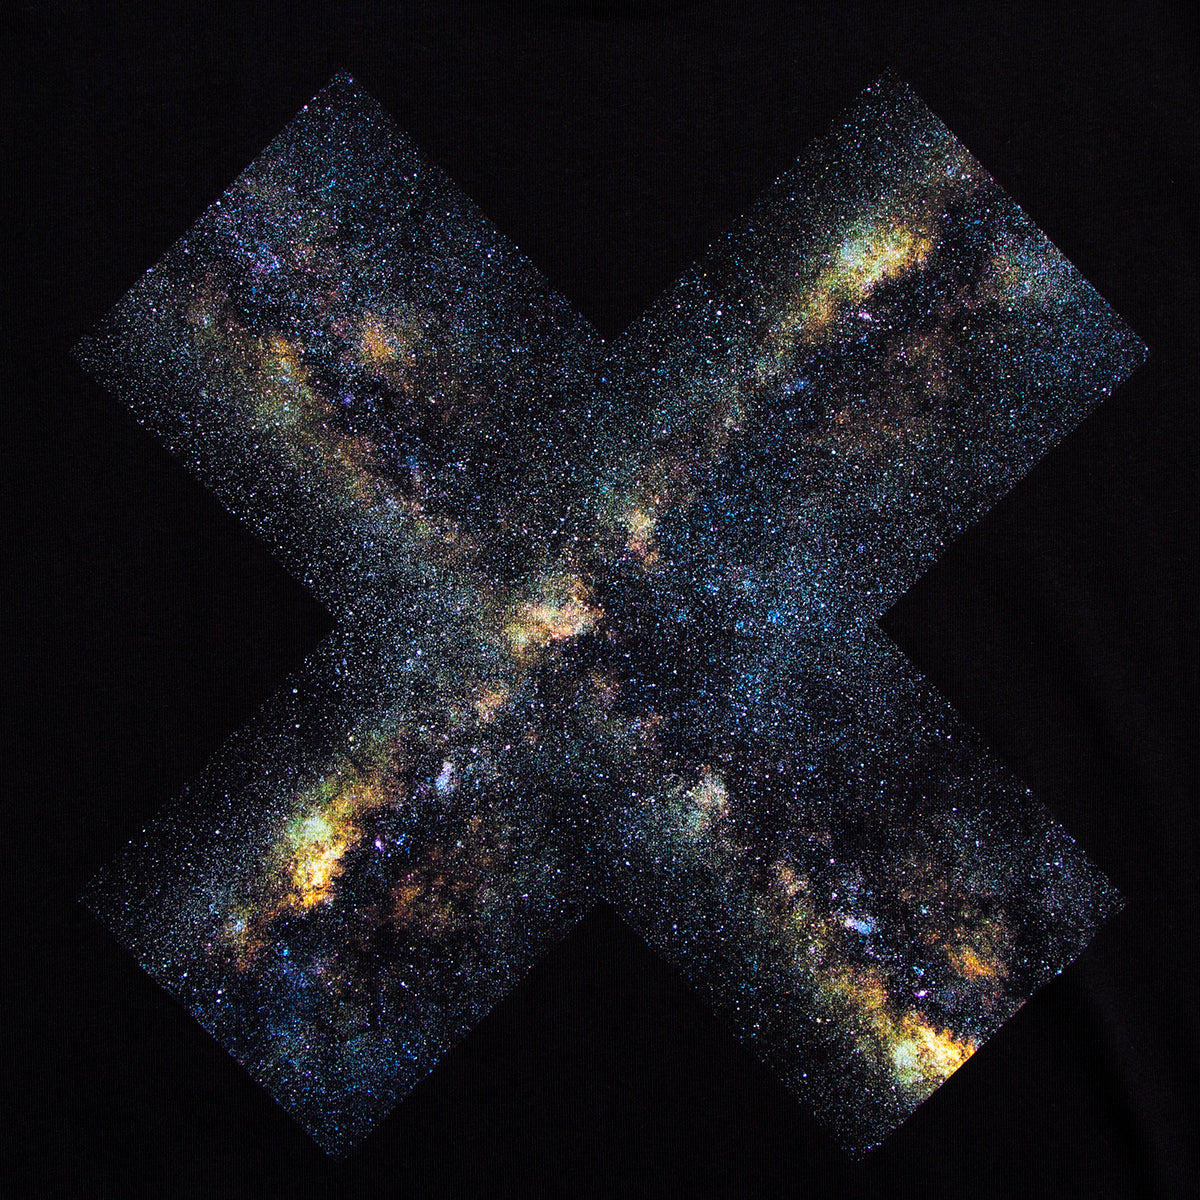 Solar System X Imprint - Tshirt - Black